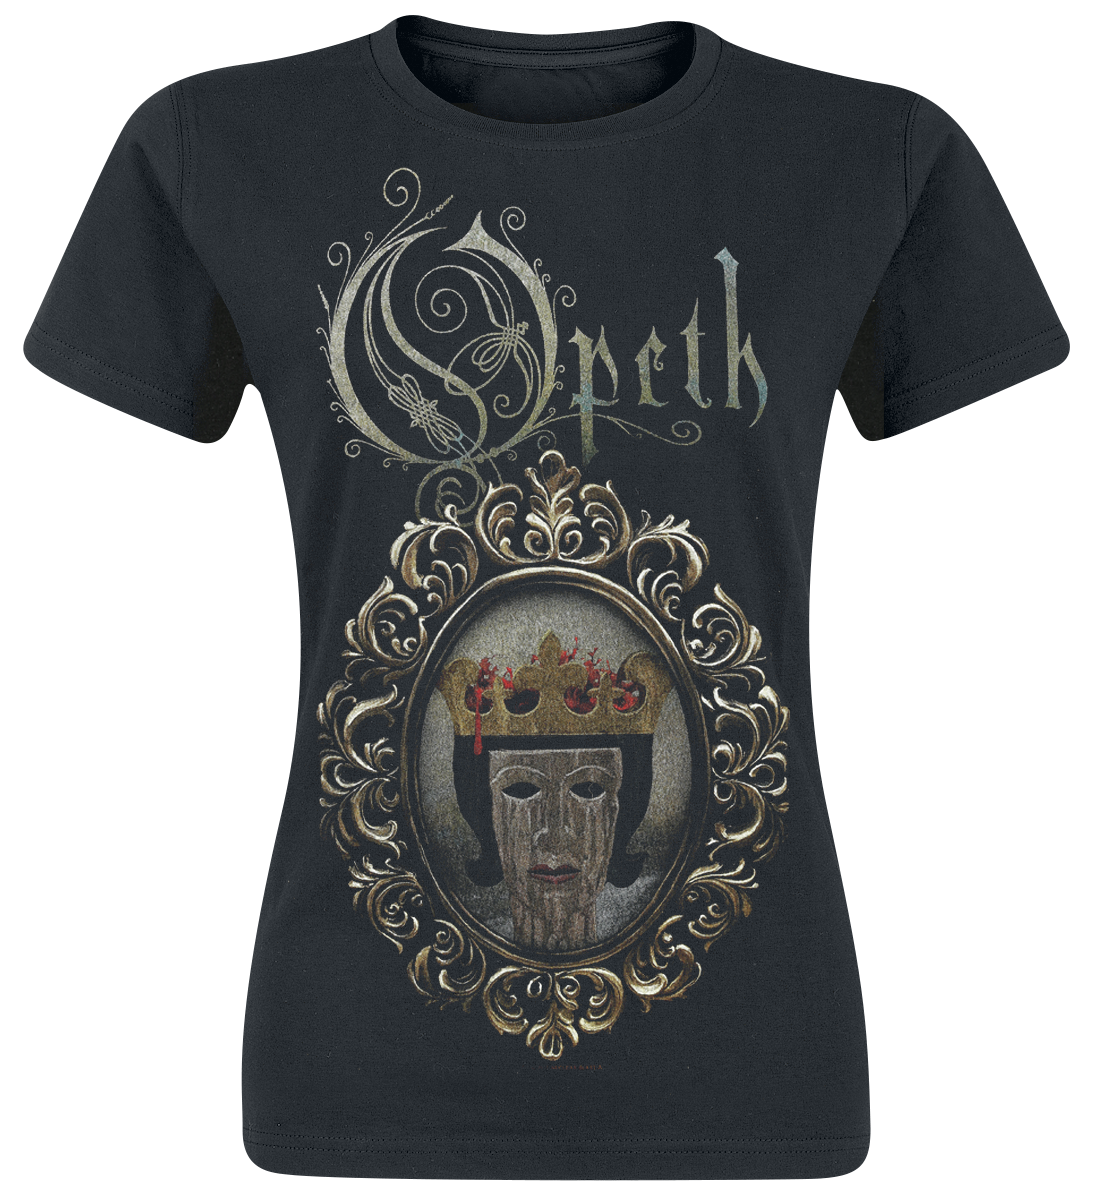 Opeth - Crown - Girls shirt - black image